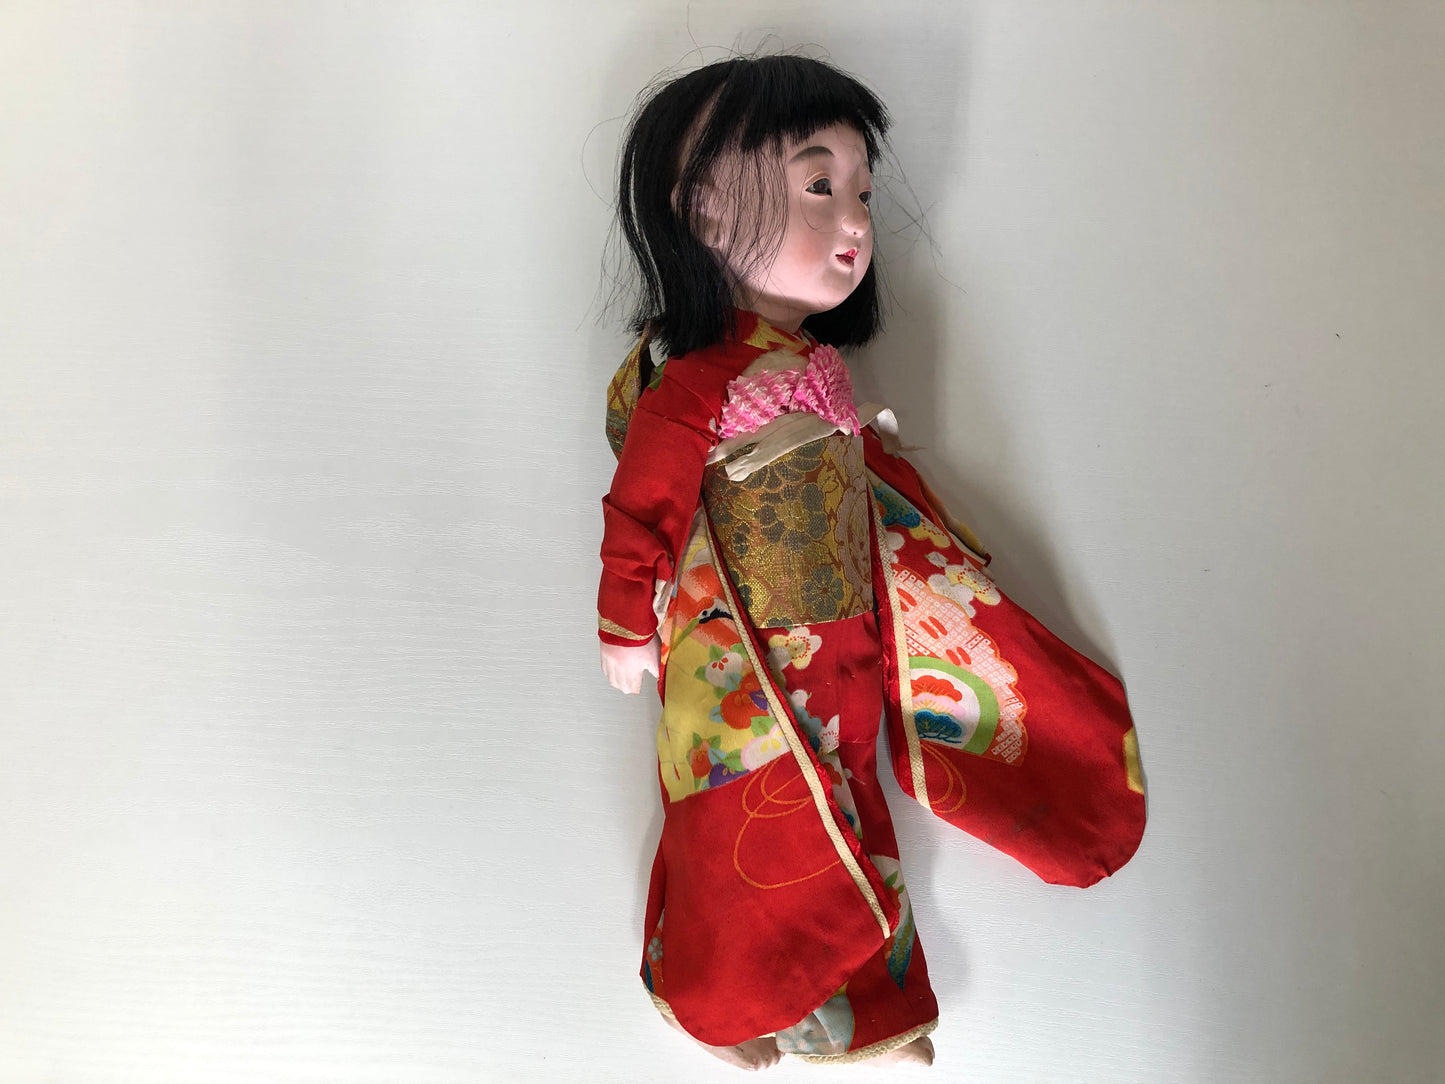 Y3900 NINGYO Ichimatsu Doll girl flower kimono Japan vintage figure antique